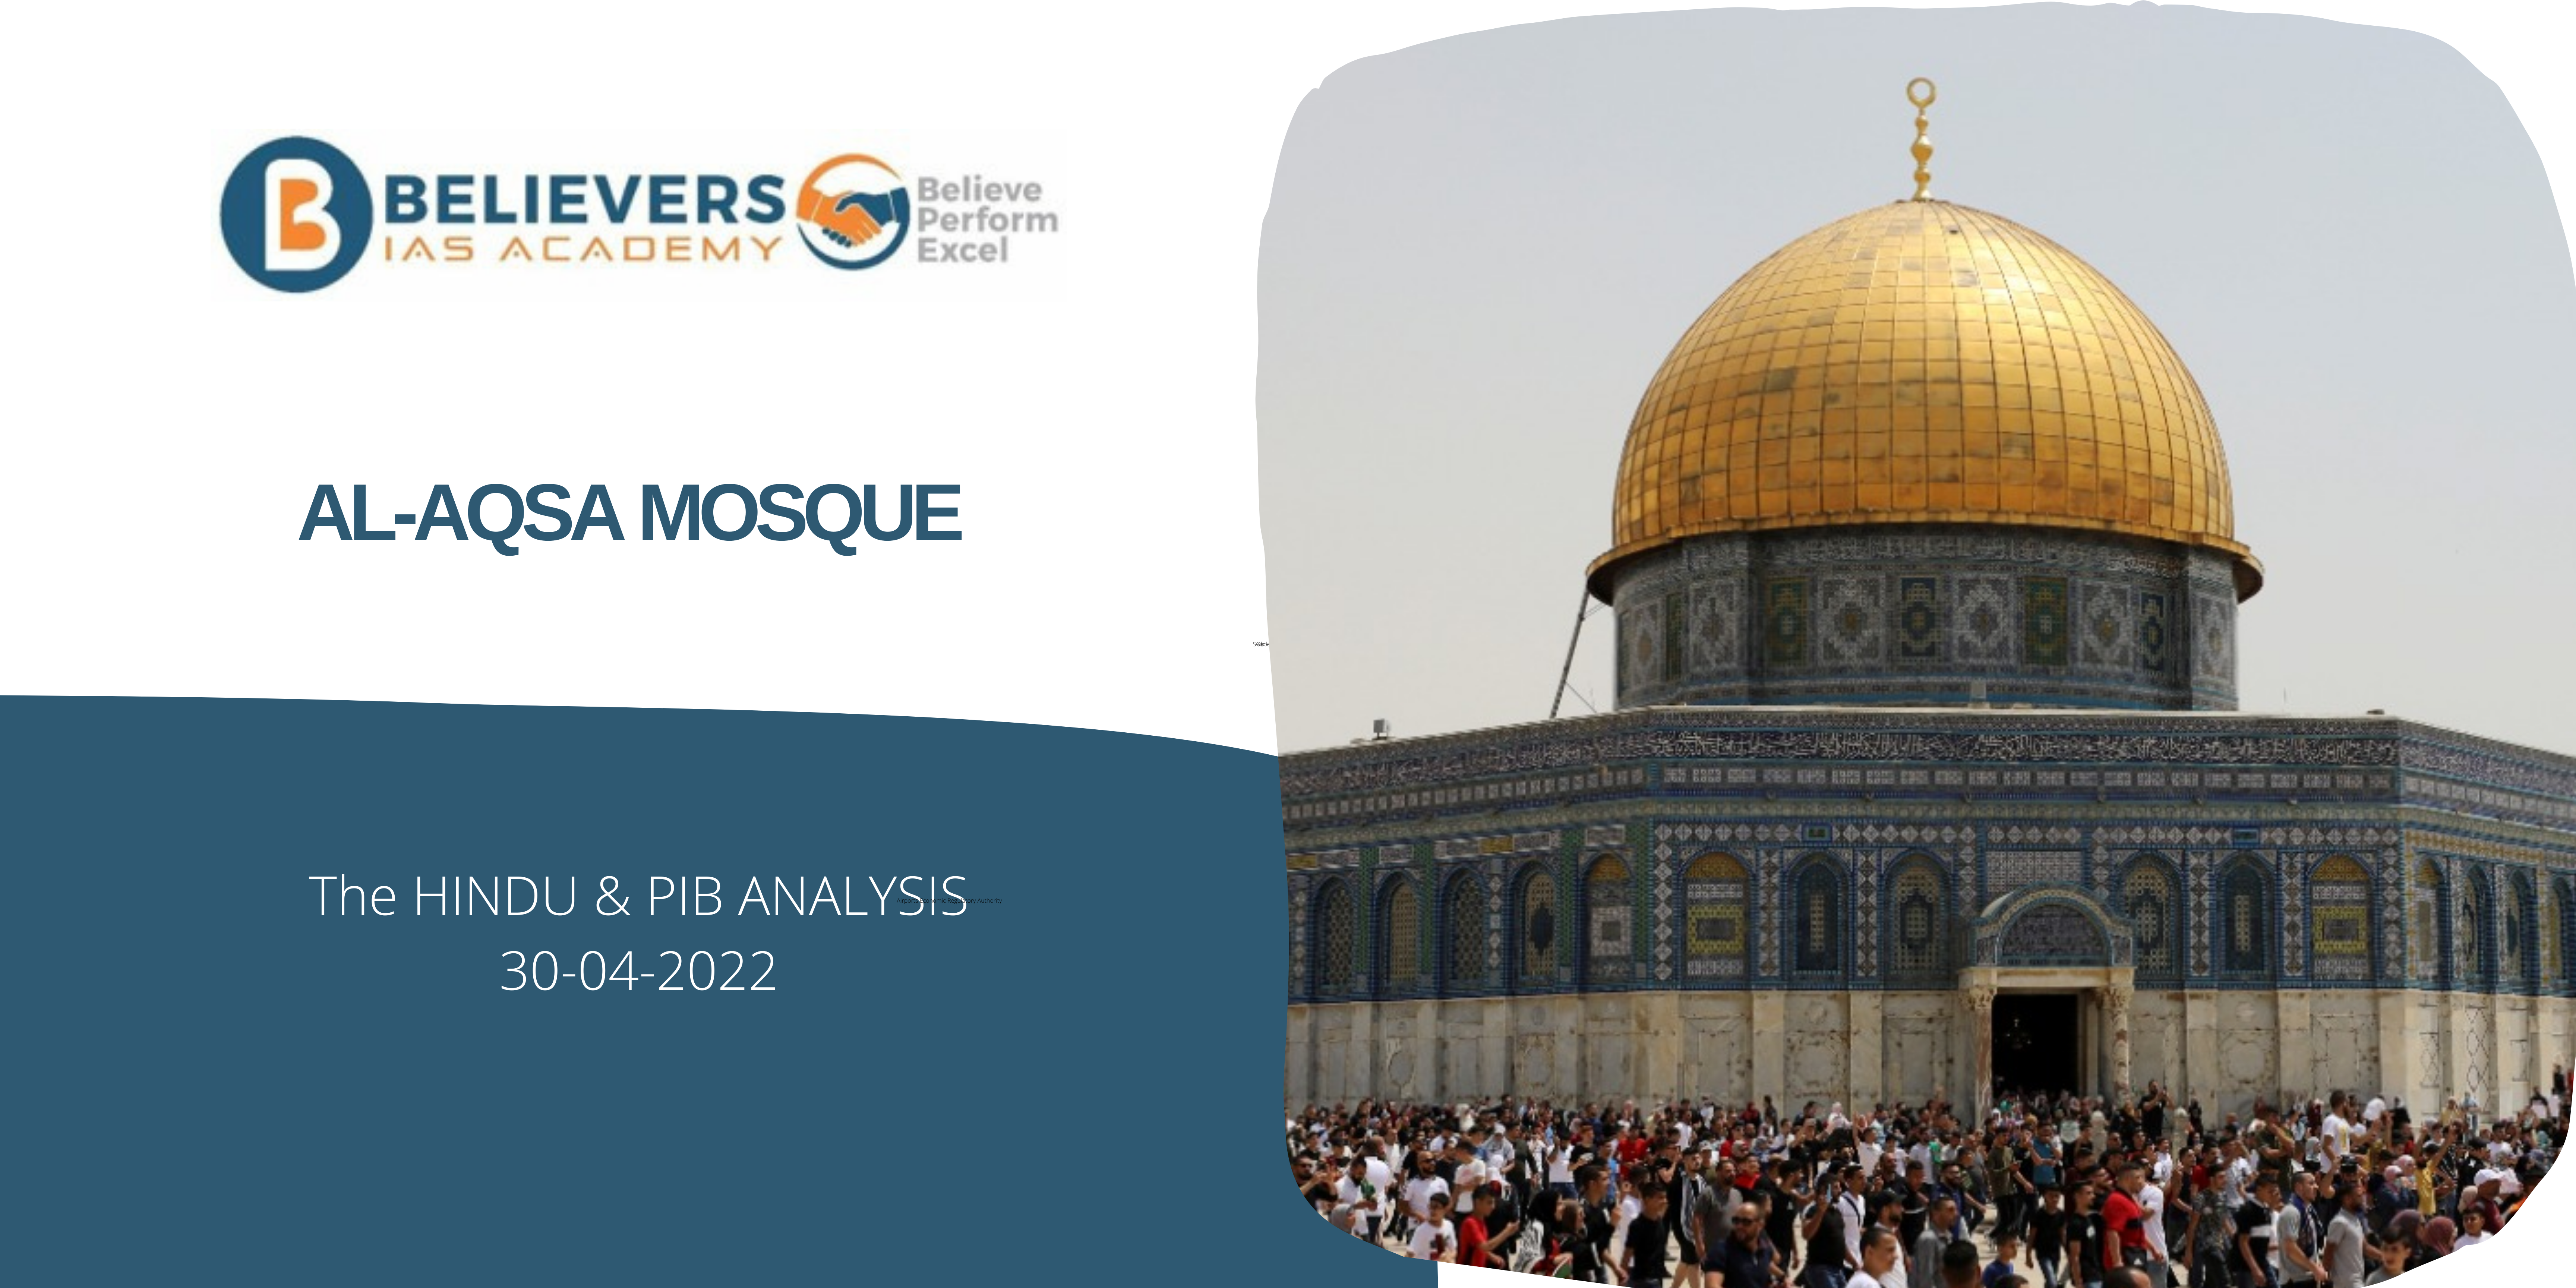 IAS Current affairs - Al-Aqsa Mosque: A Complete Overview